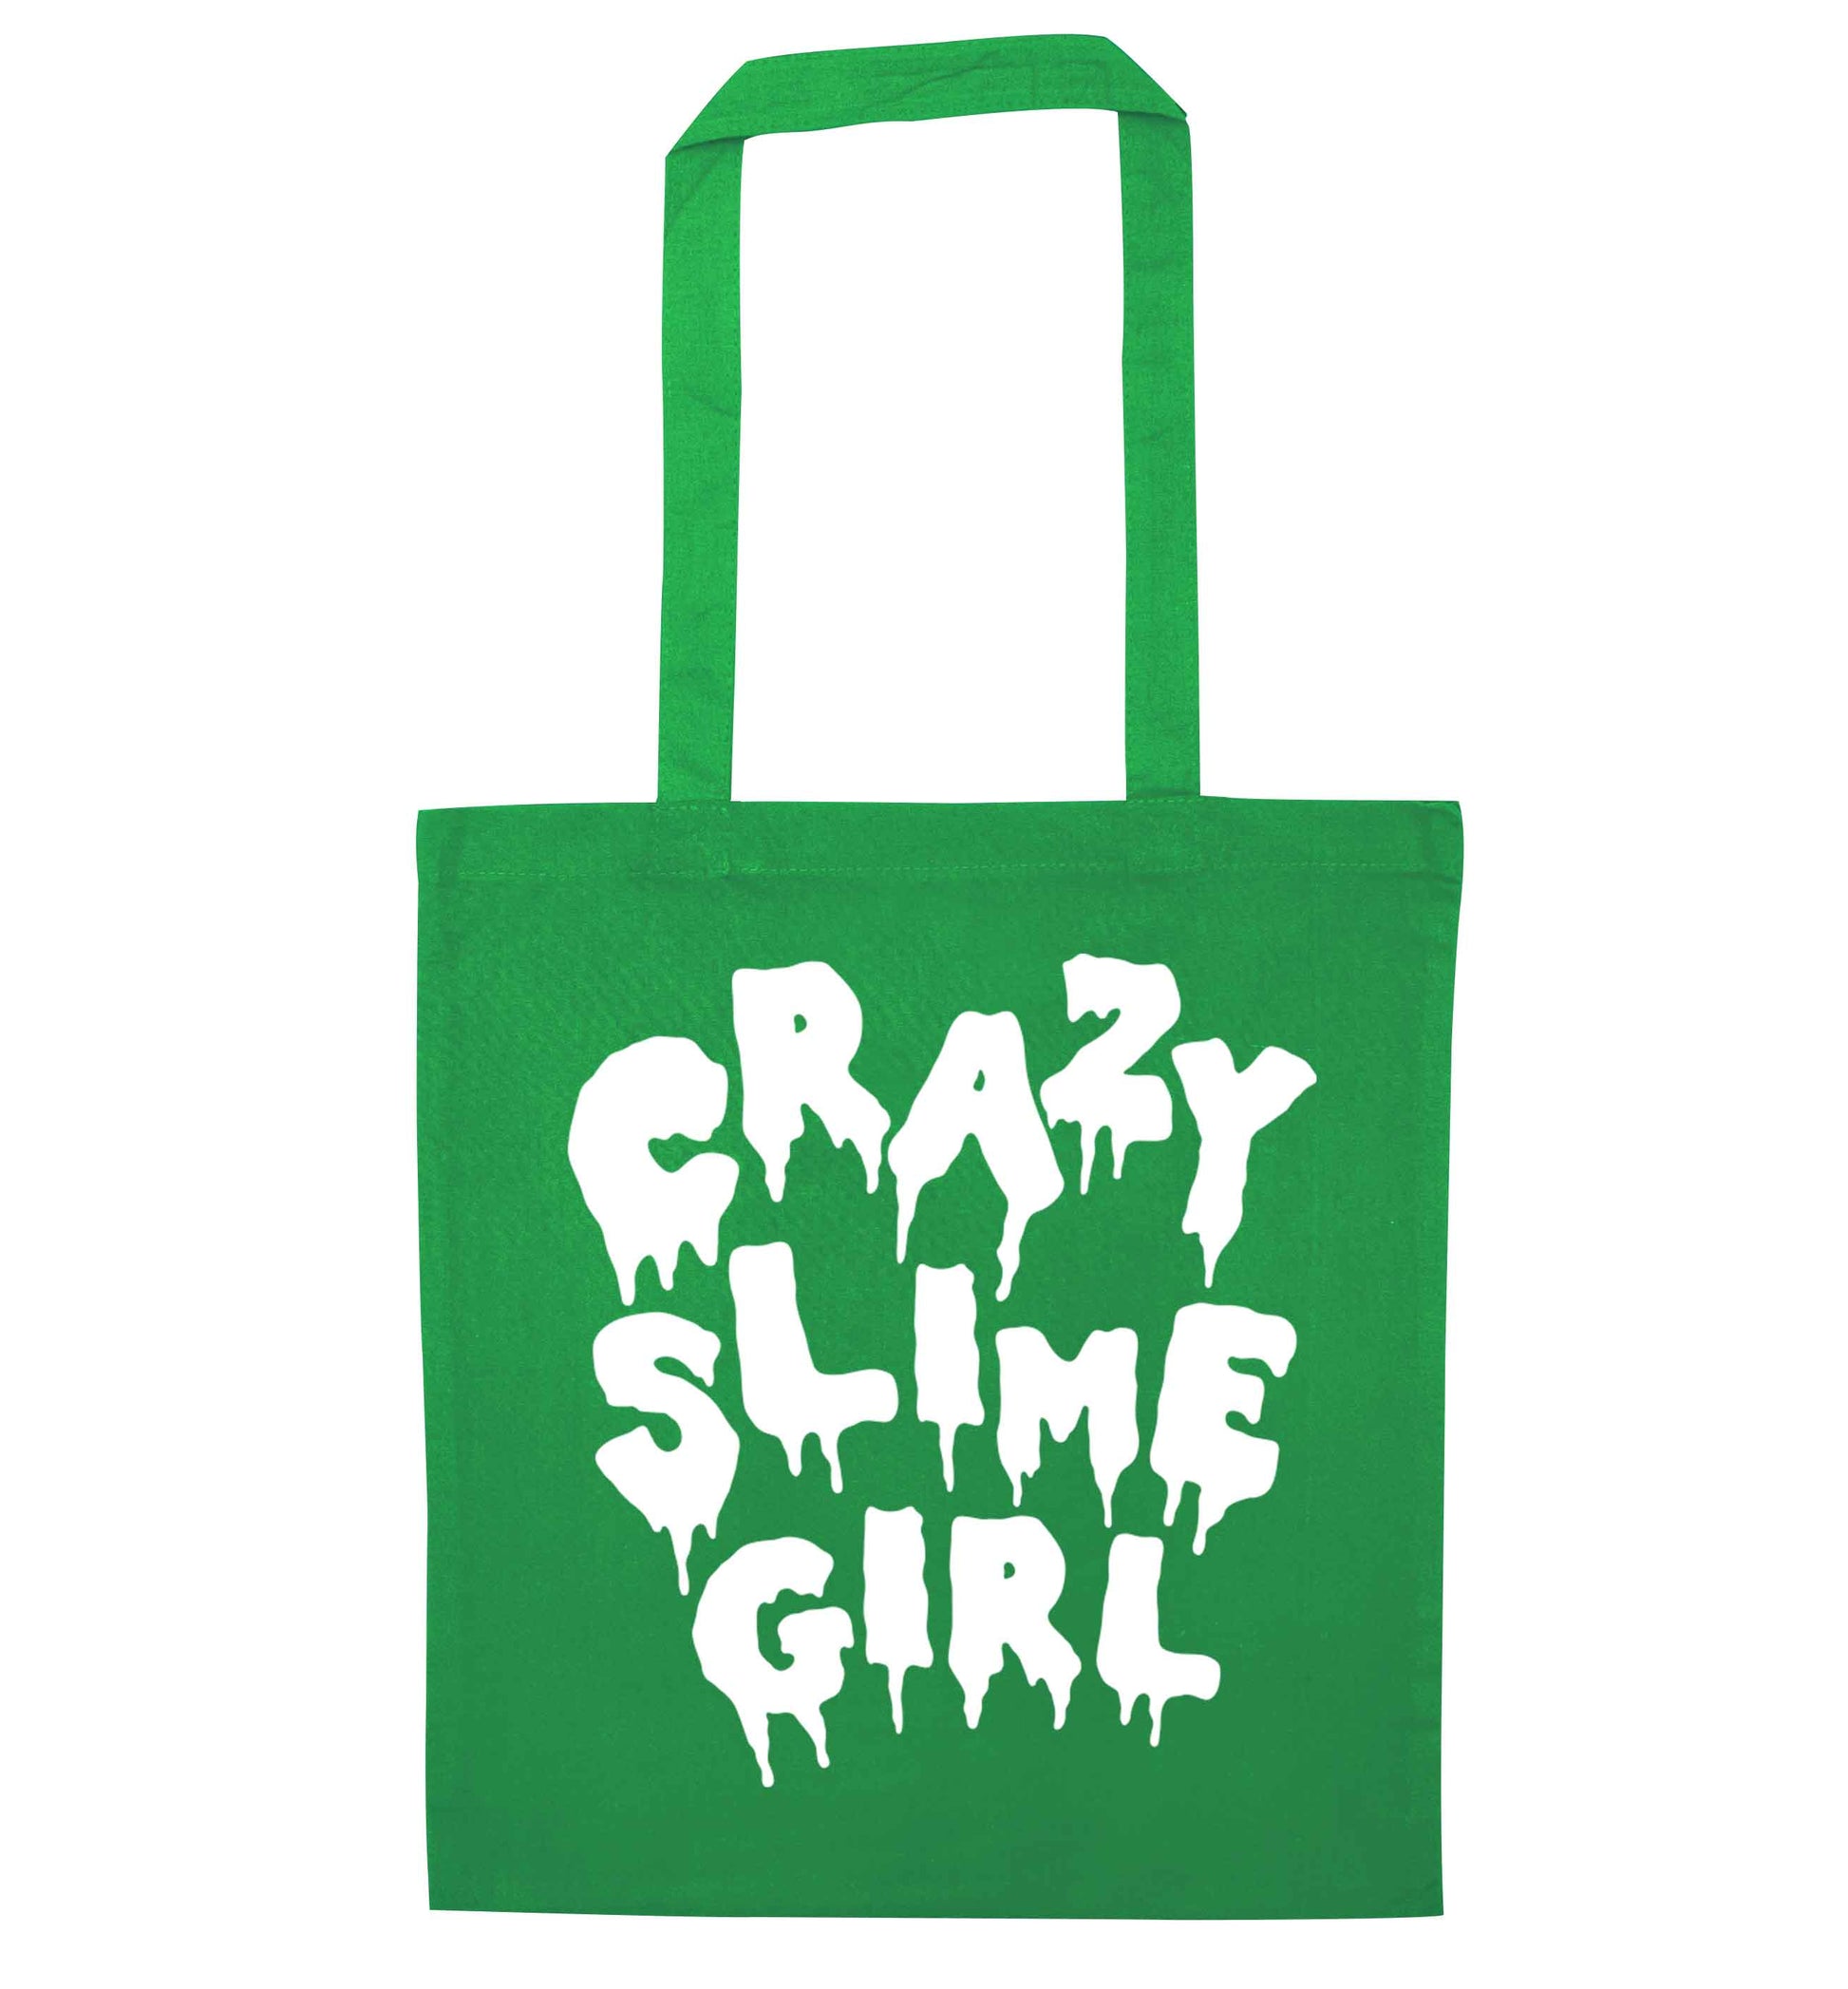 Crazy slime girl green tote bag